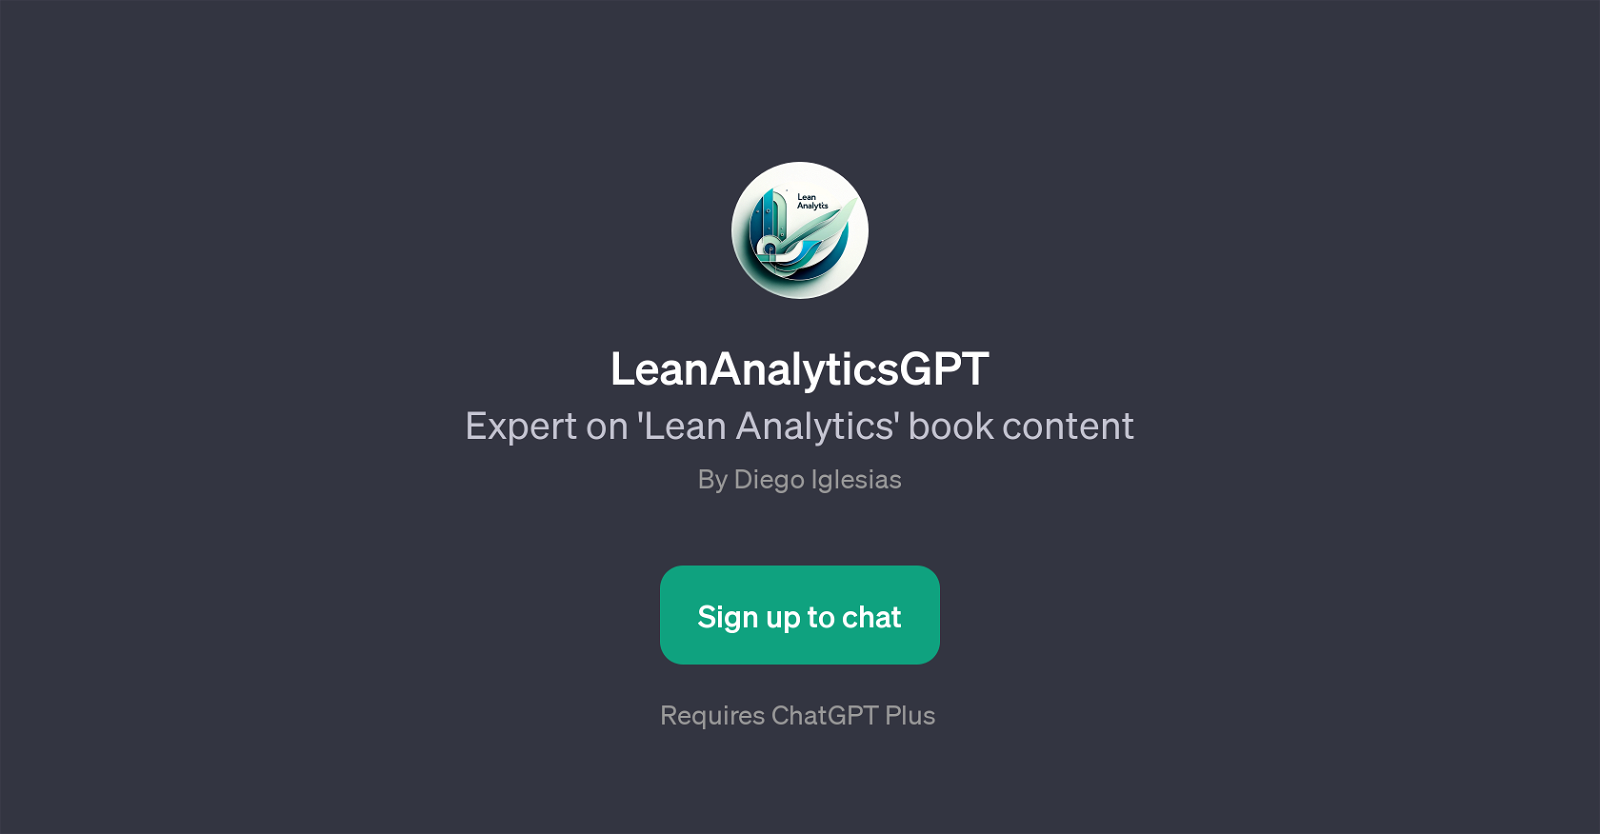 LeanAnalyticsGPT website